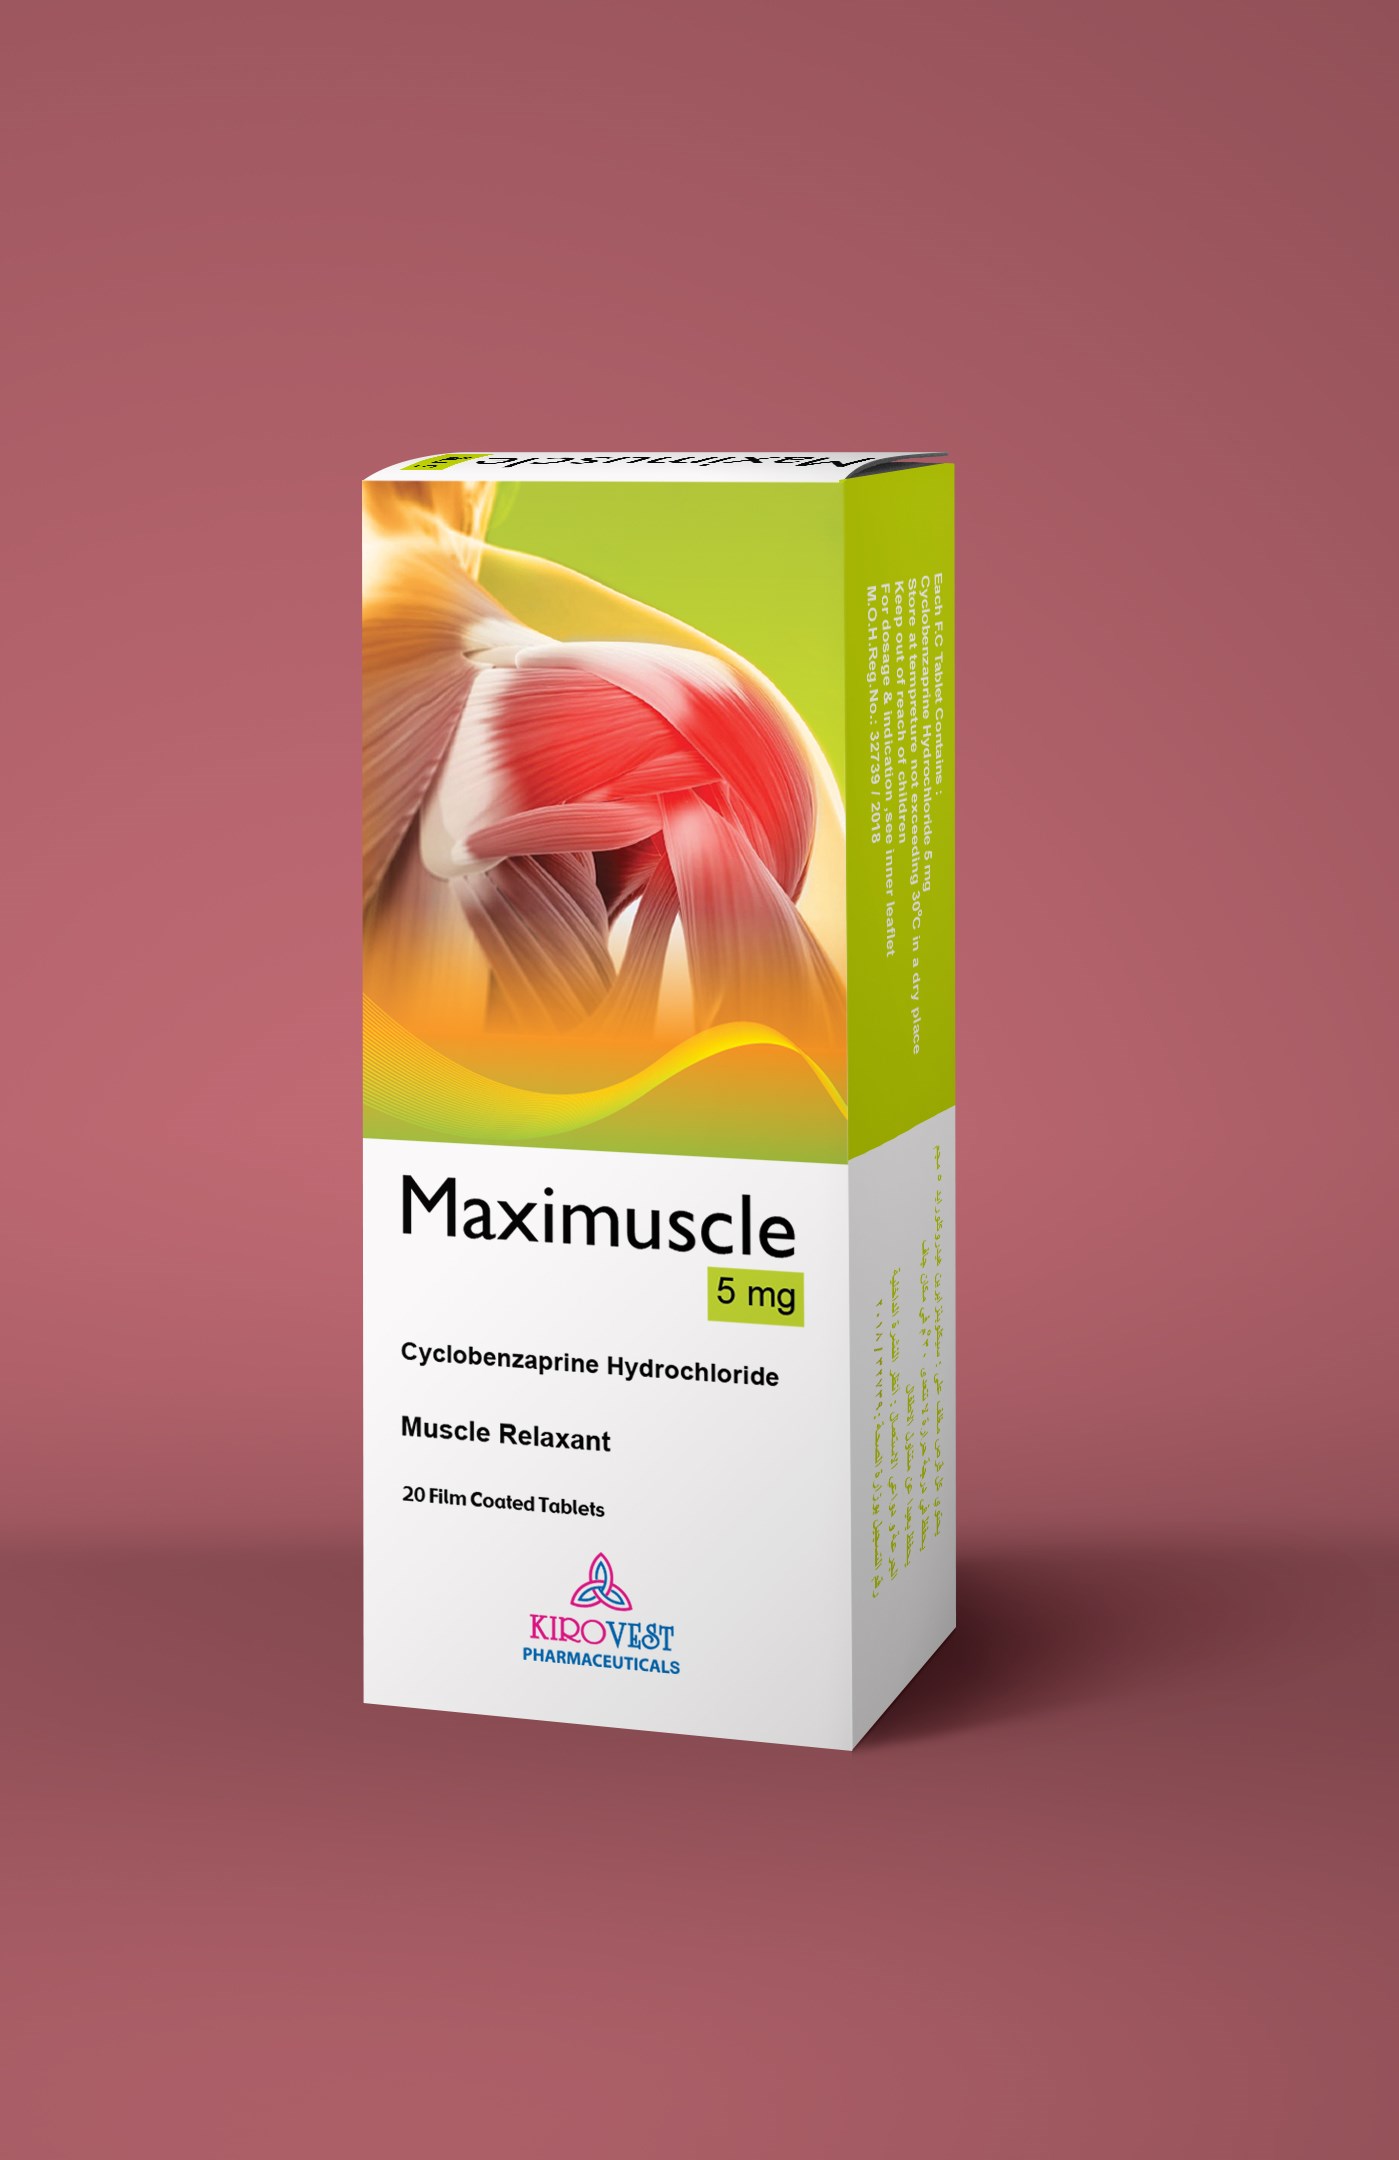 Maximuscle 5 mg